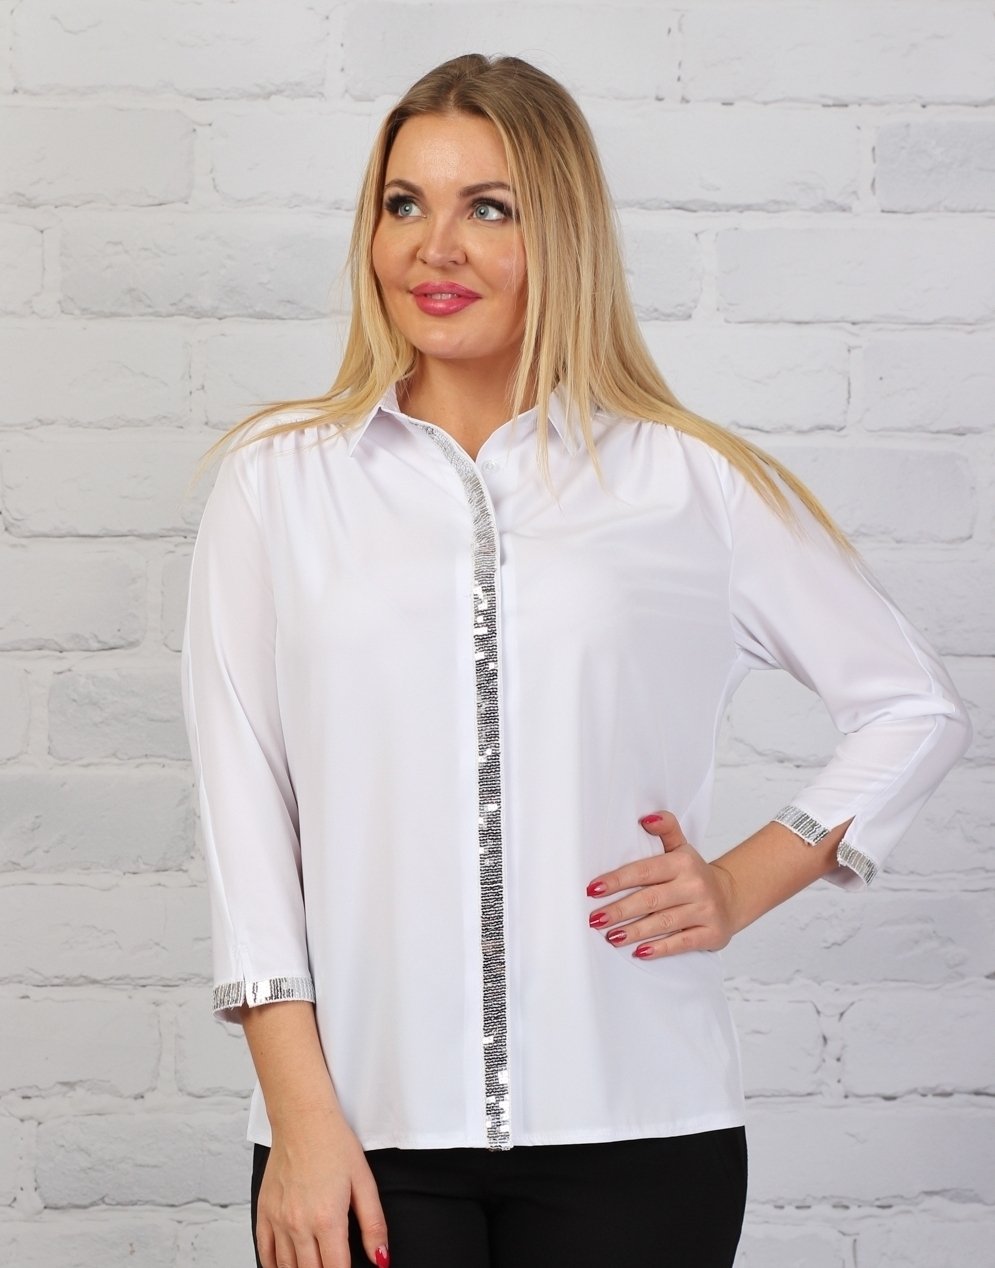 Недорогие блузки интернете. Фабрика Алона блузки. Блузки на валберис. Белая блузка. Блуза белая.